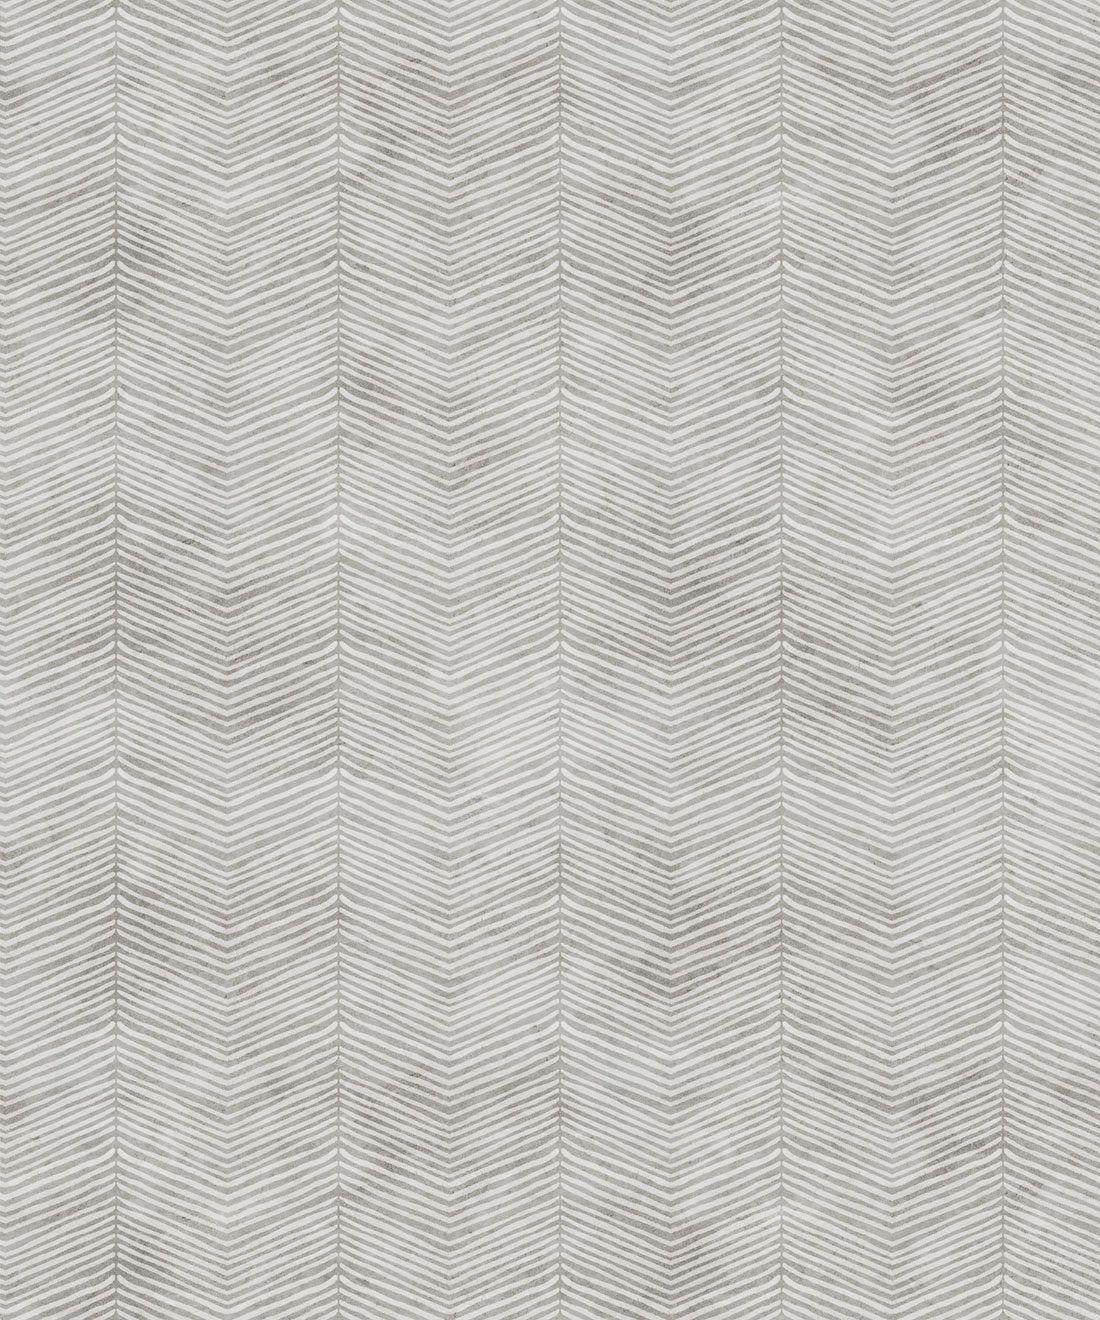 Herringbone in Beige is a rustic geometic wallpaper design